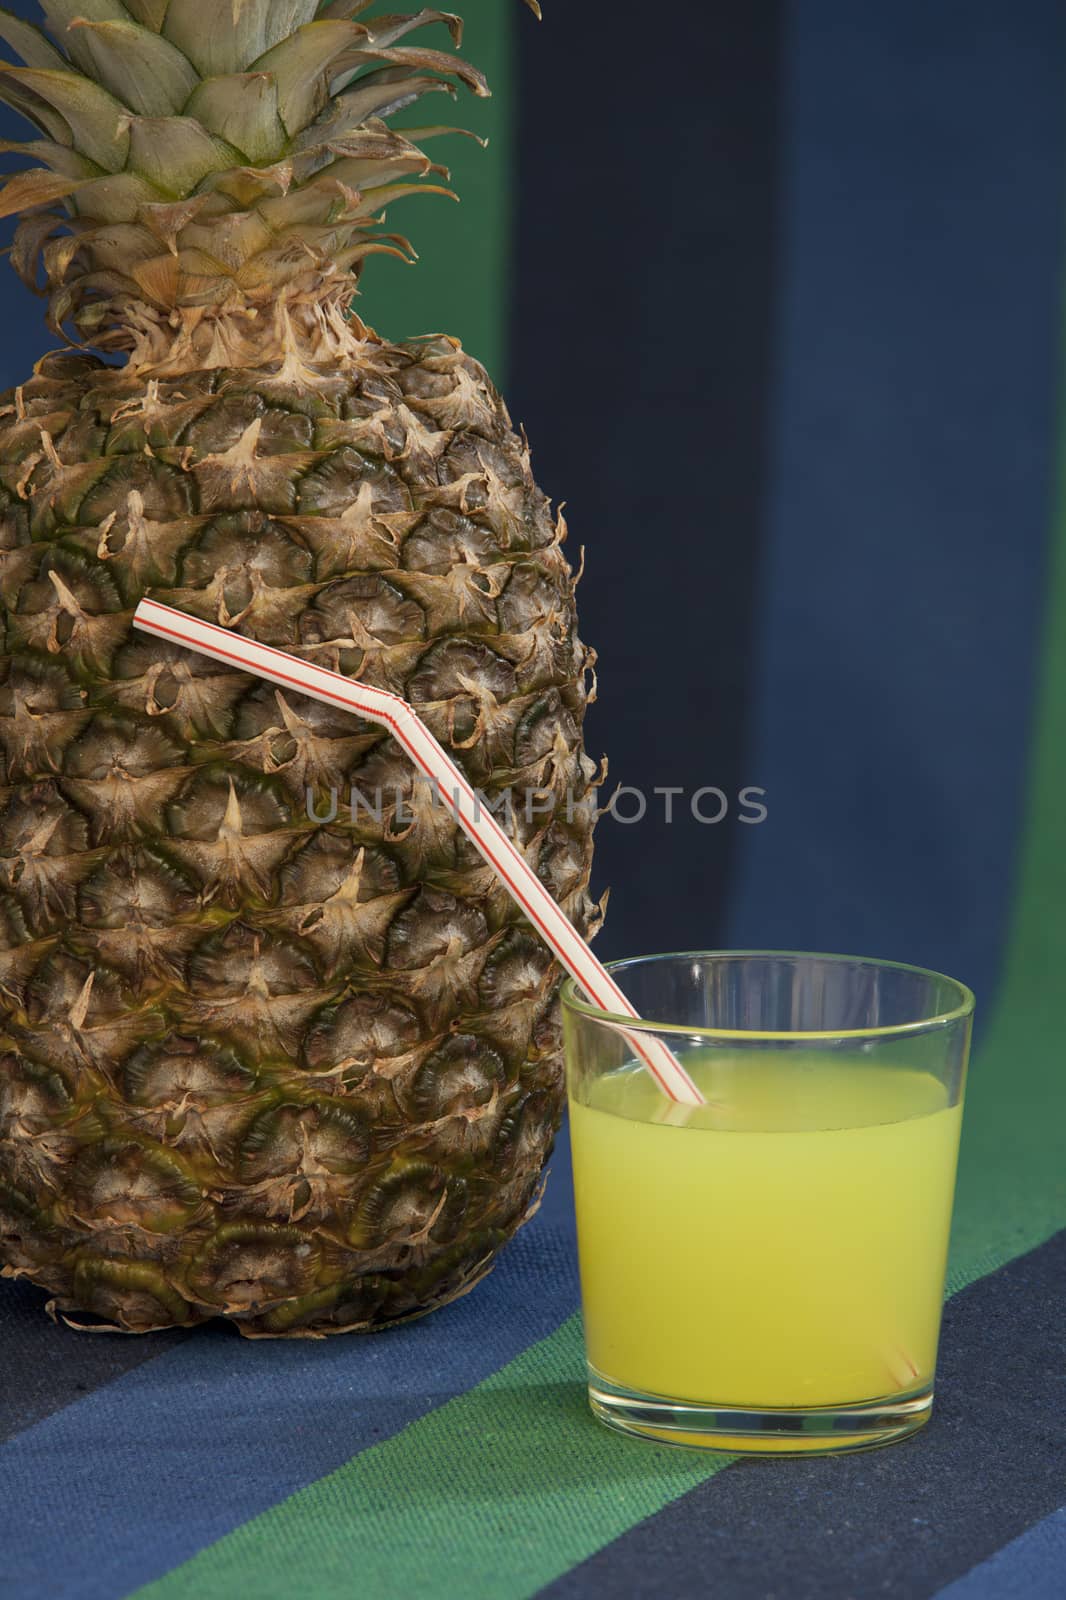  Pineapple juice and straws still life by mrivserg